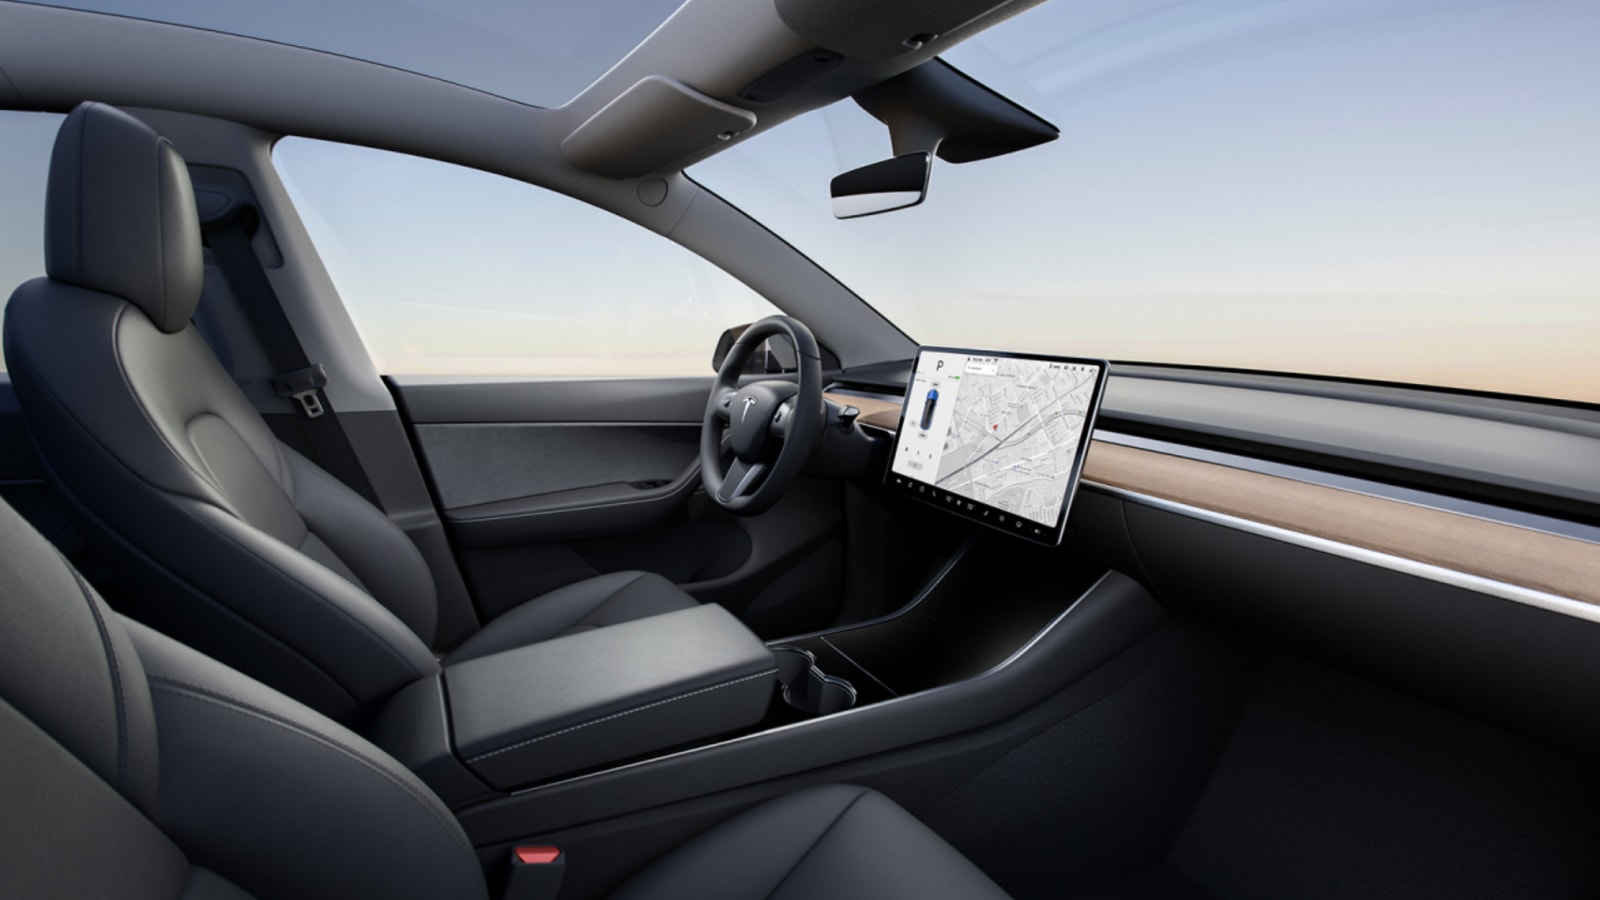 2022 Tesla Model Y - interior and Exterior Details (High-Tech SUV) 